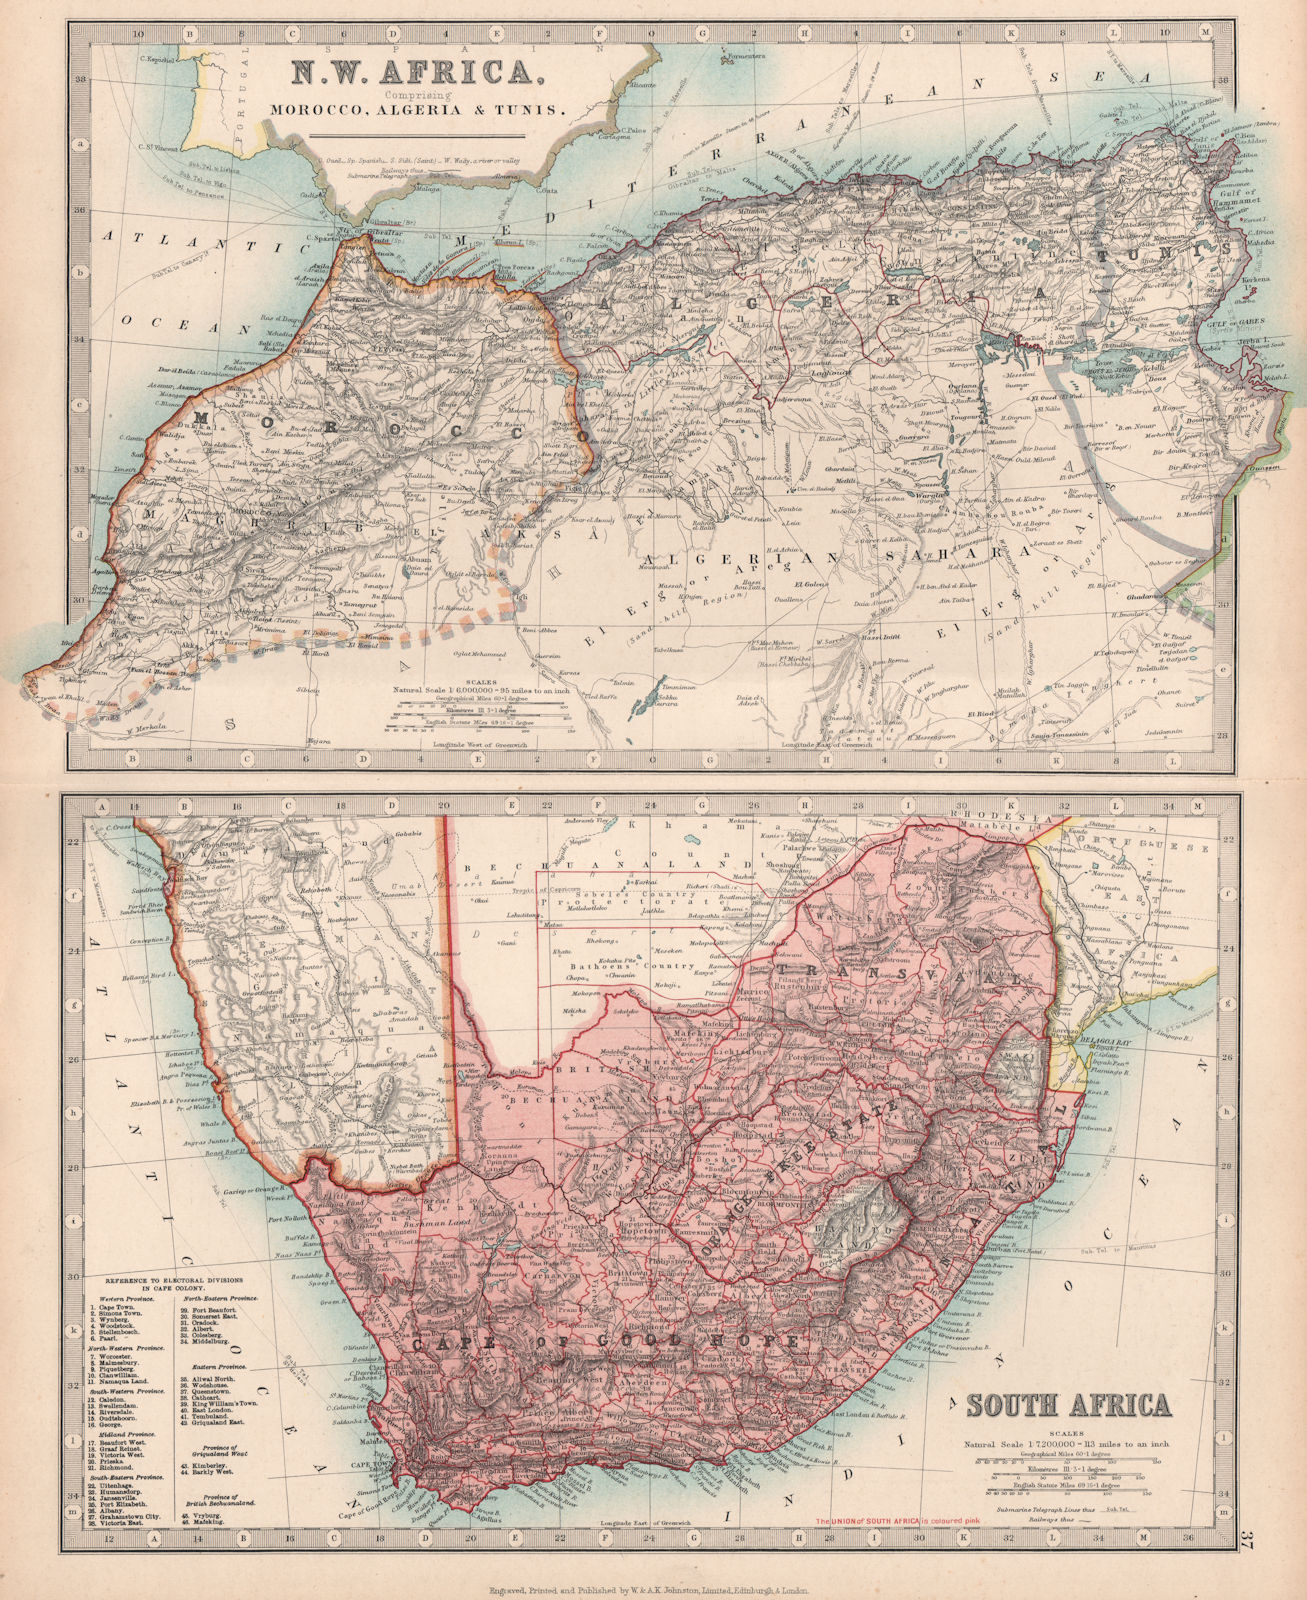 Associate Product MAGHREB & UNION OF SOUTH AFRICA. Morocco Algeria & Tunisia. JOHNSTON 1912 map